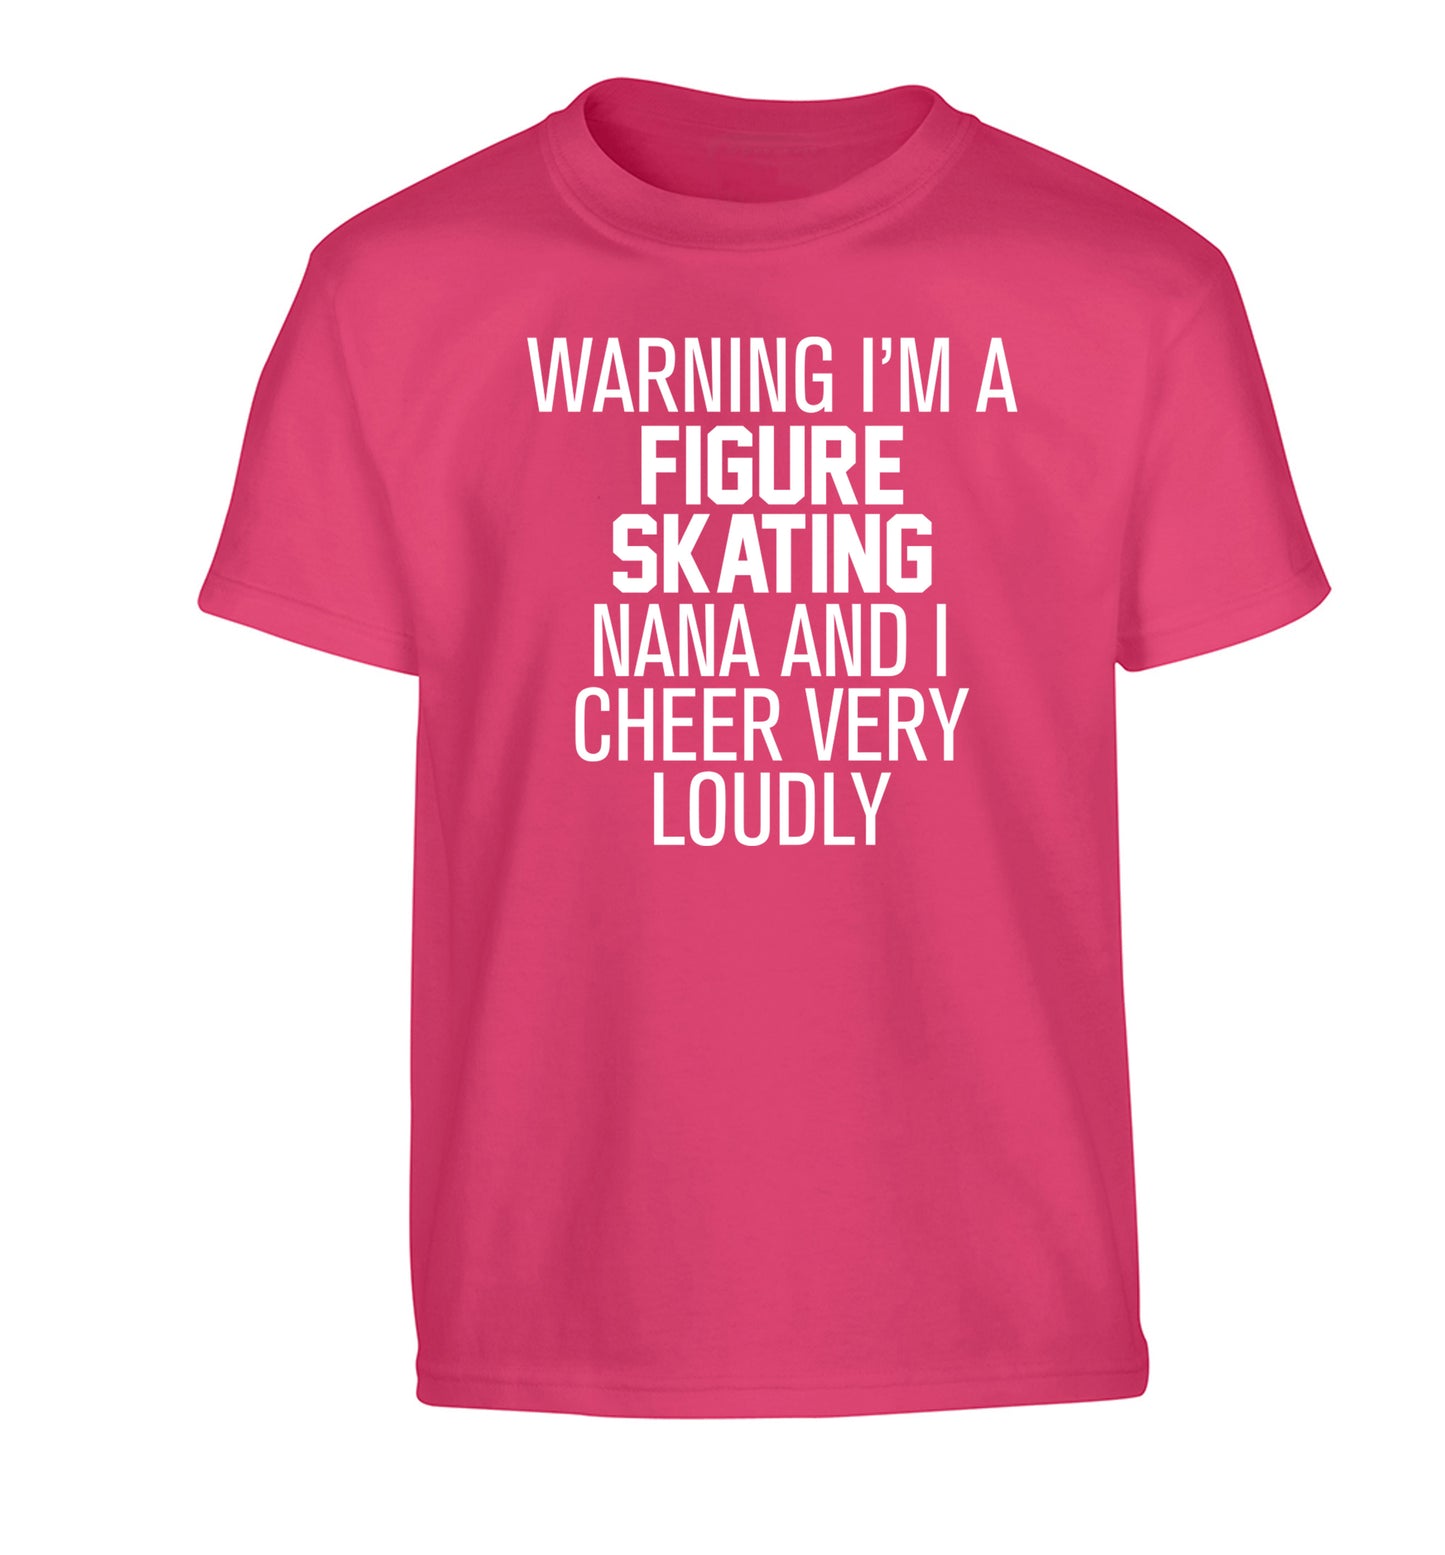 Warning I'm a figure skating nana and I cheer very loudly Children's pink Tshirt 12-14 Years